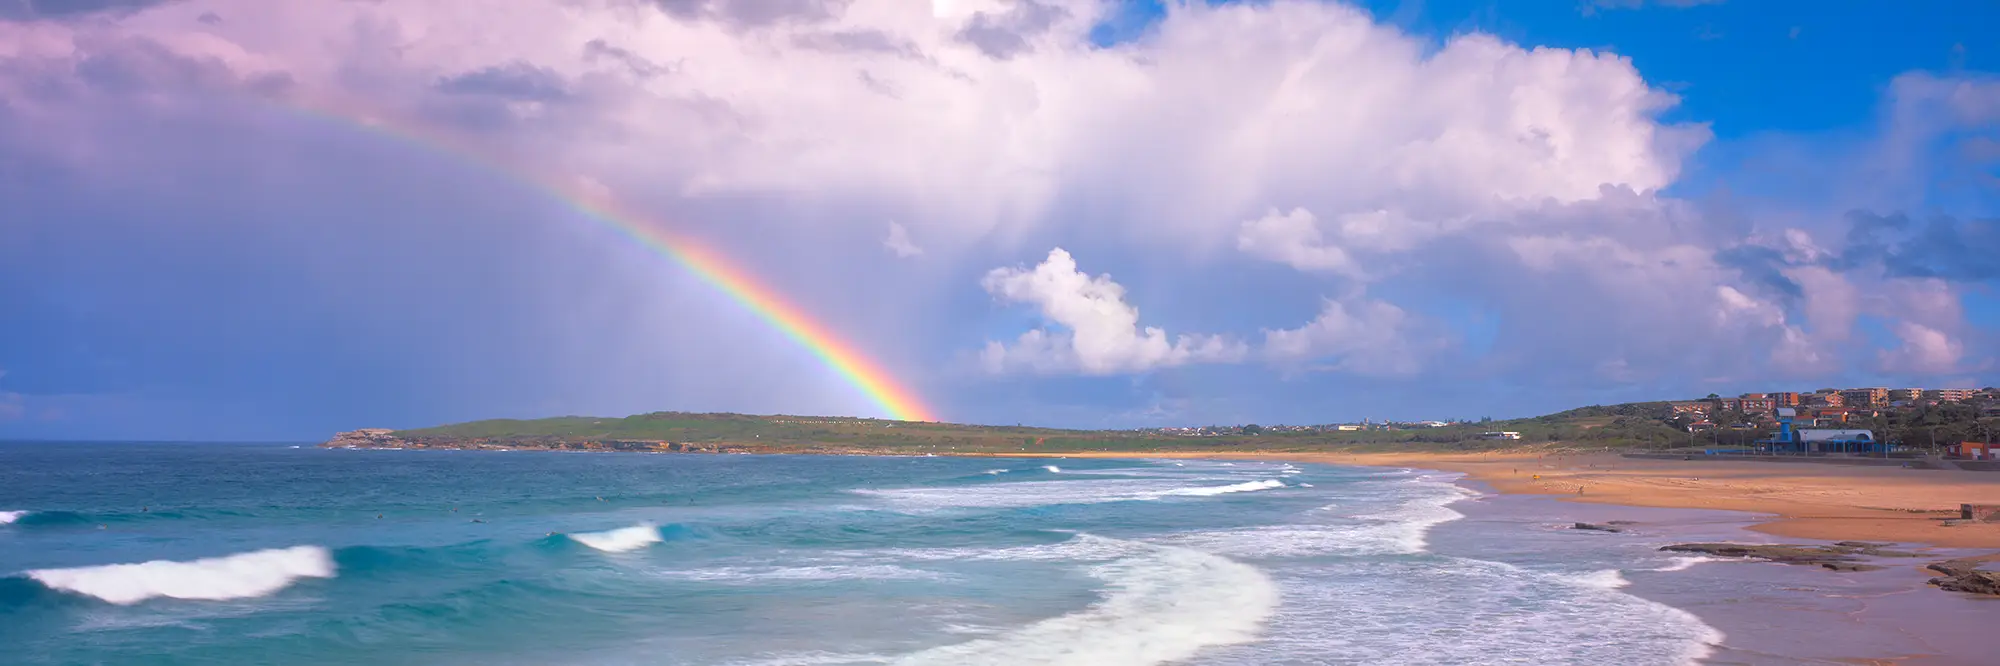 Maroubra Beach Afternoon Storm Rainbow Panoramic Photos